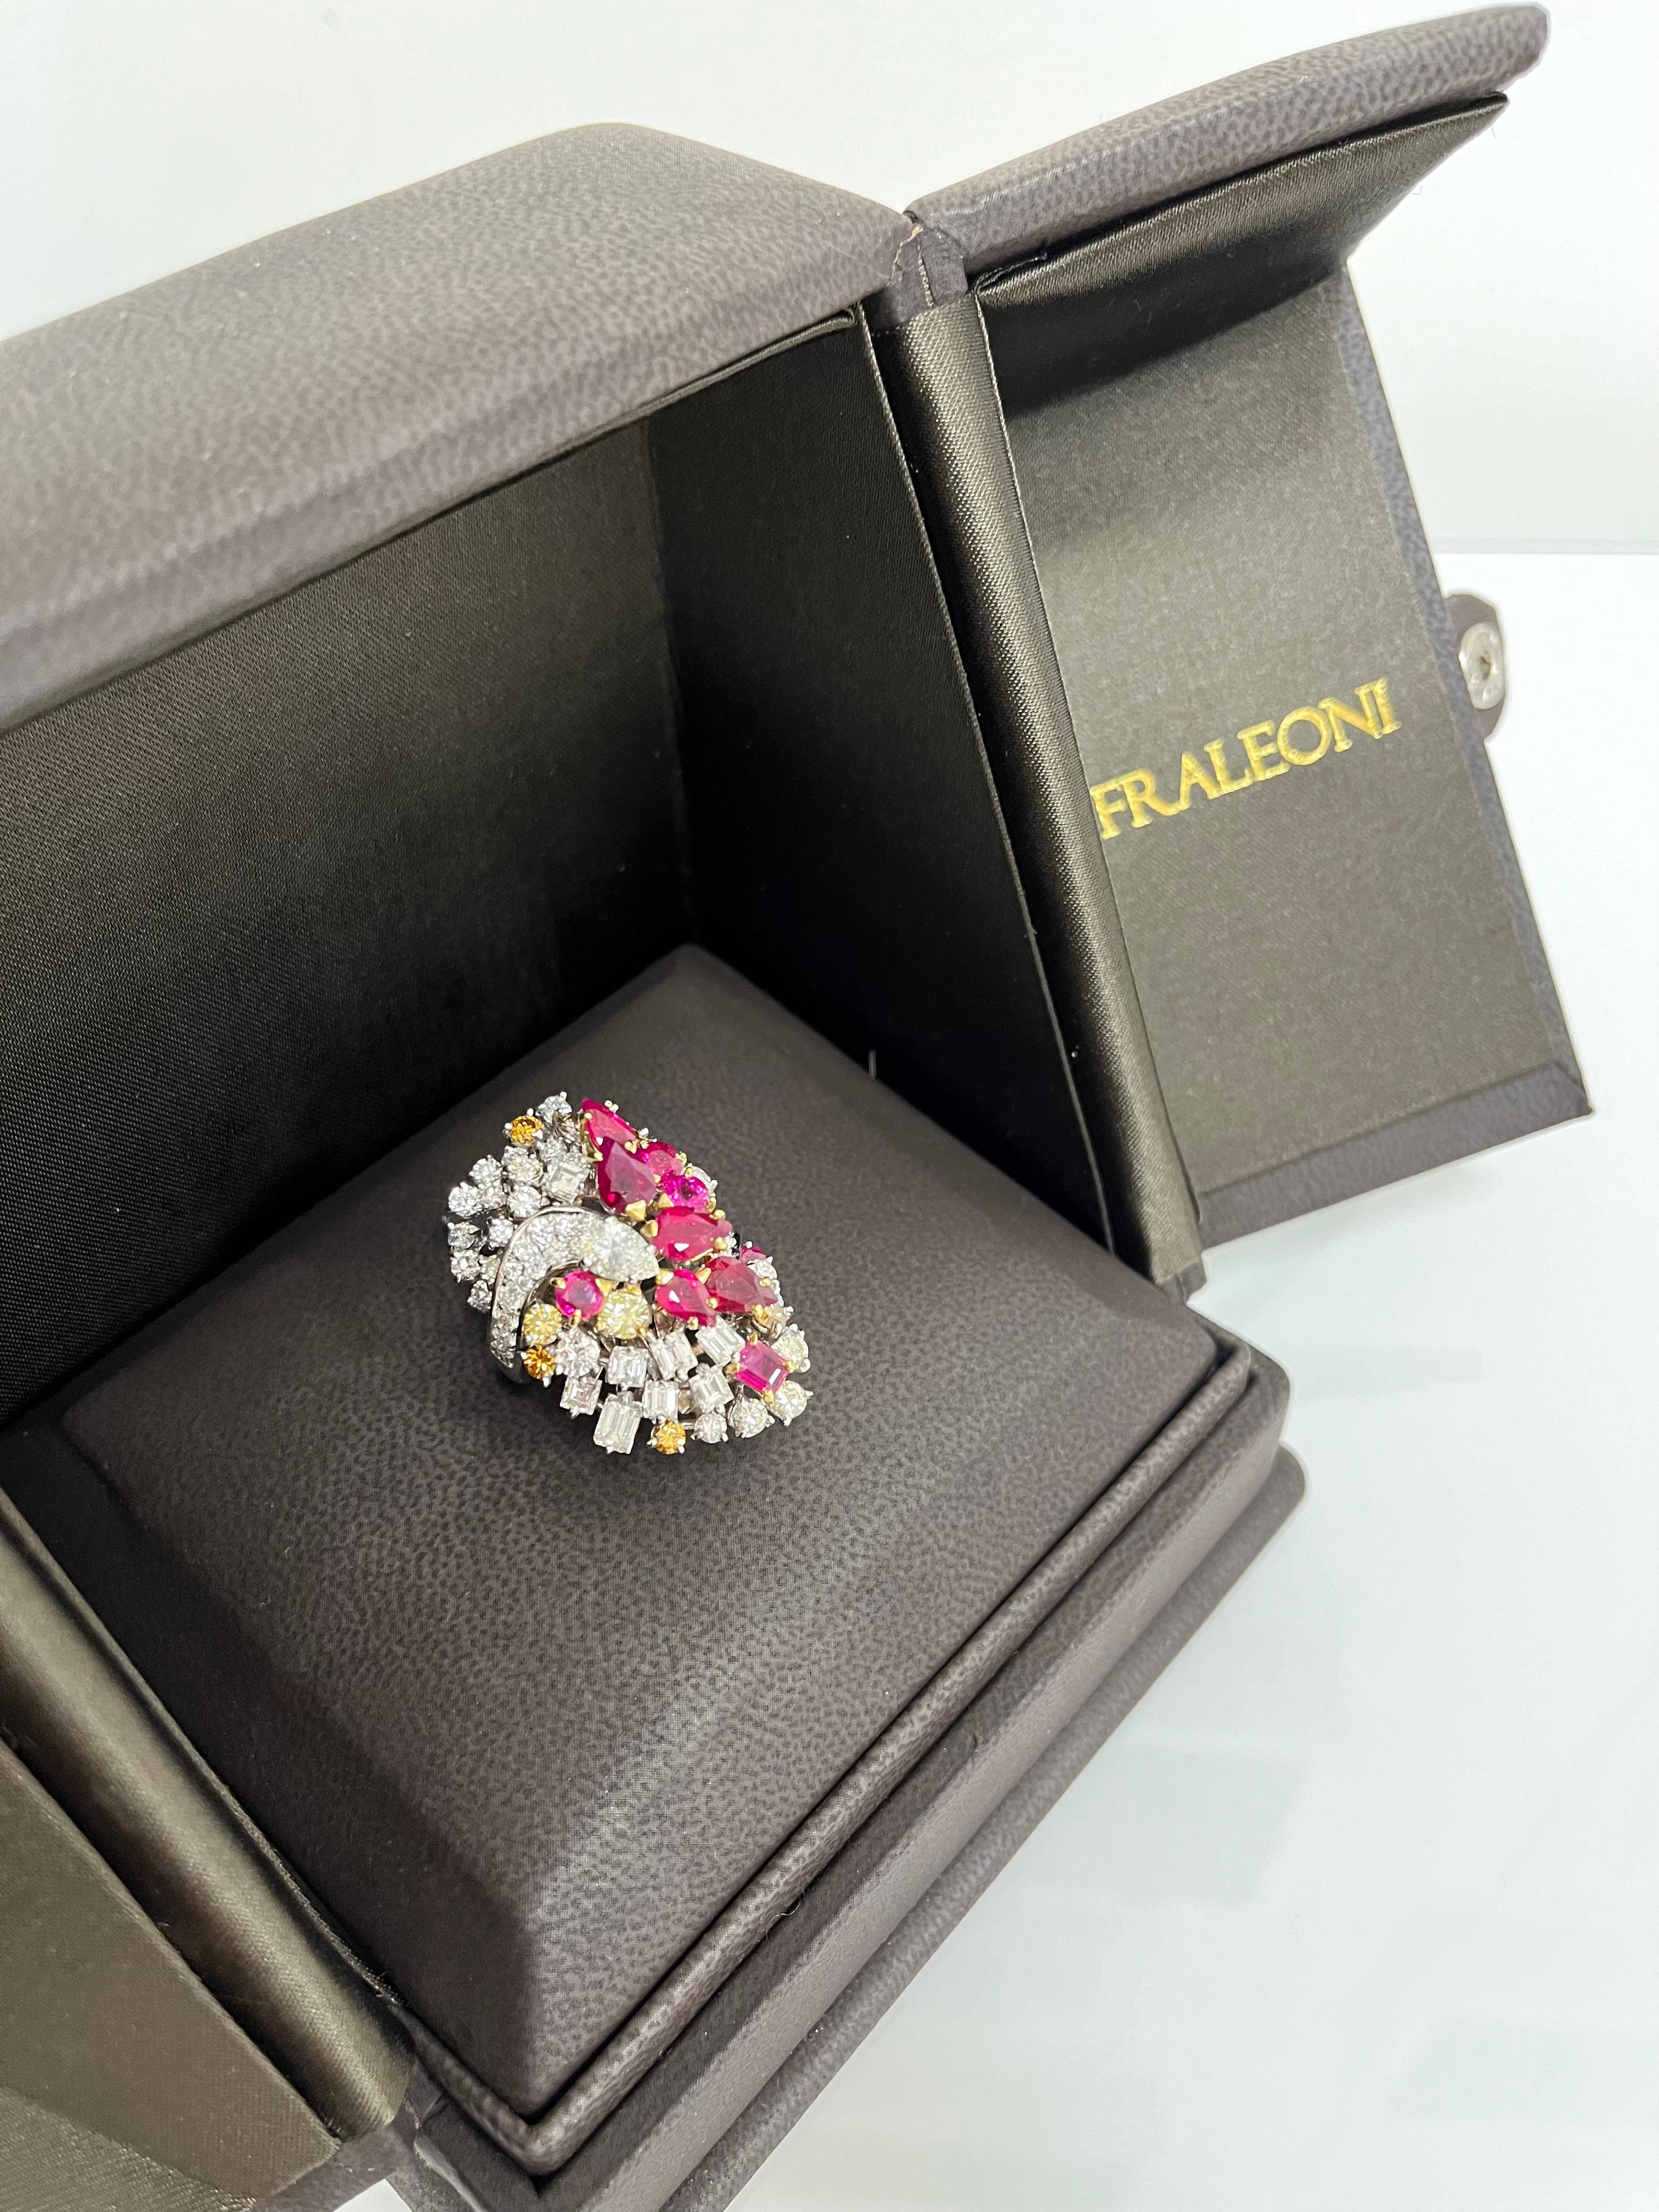 Fraleoni 18 Kt. White Gold Diamonds Rubies Cocktail Ring For Sale 6